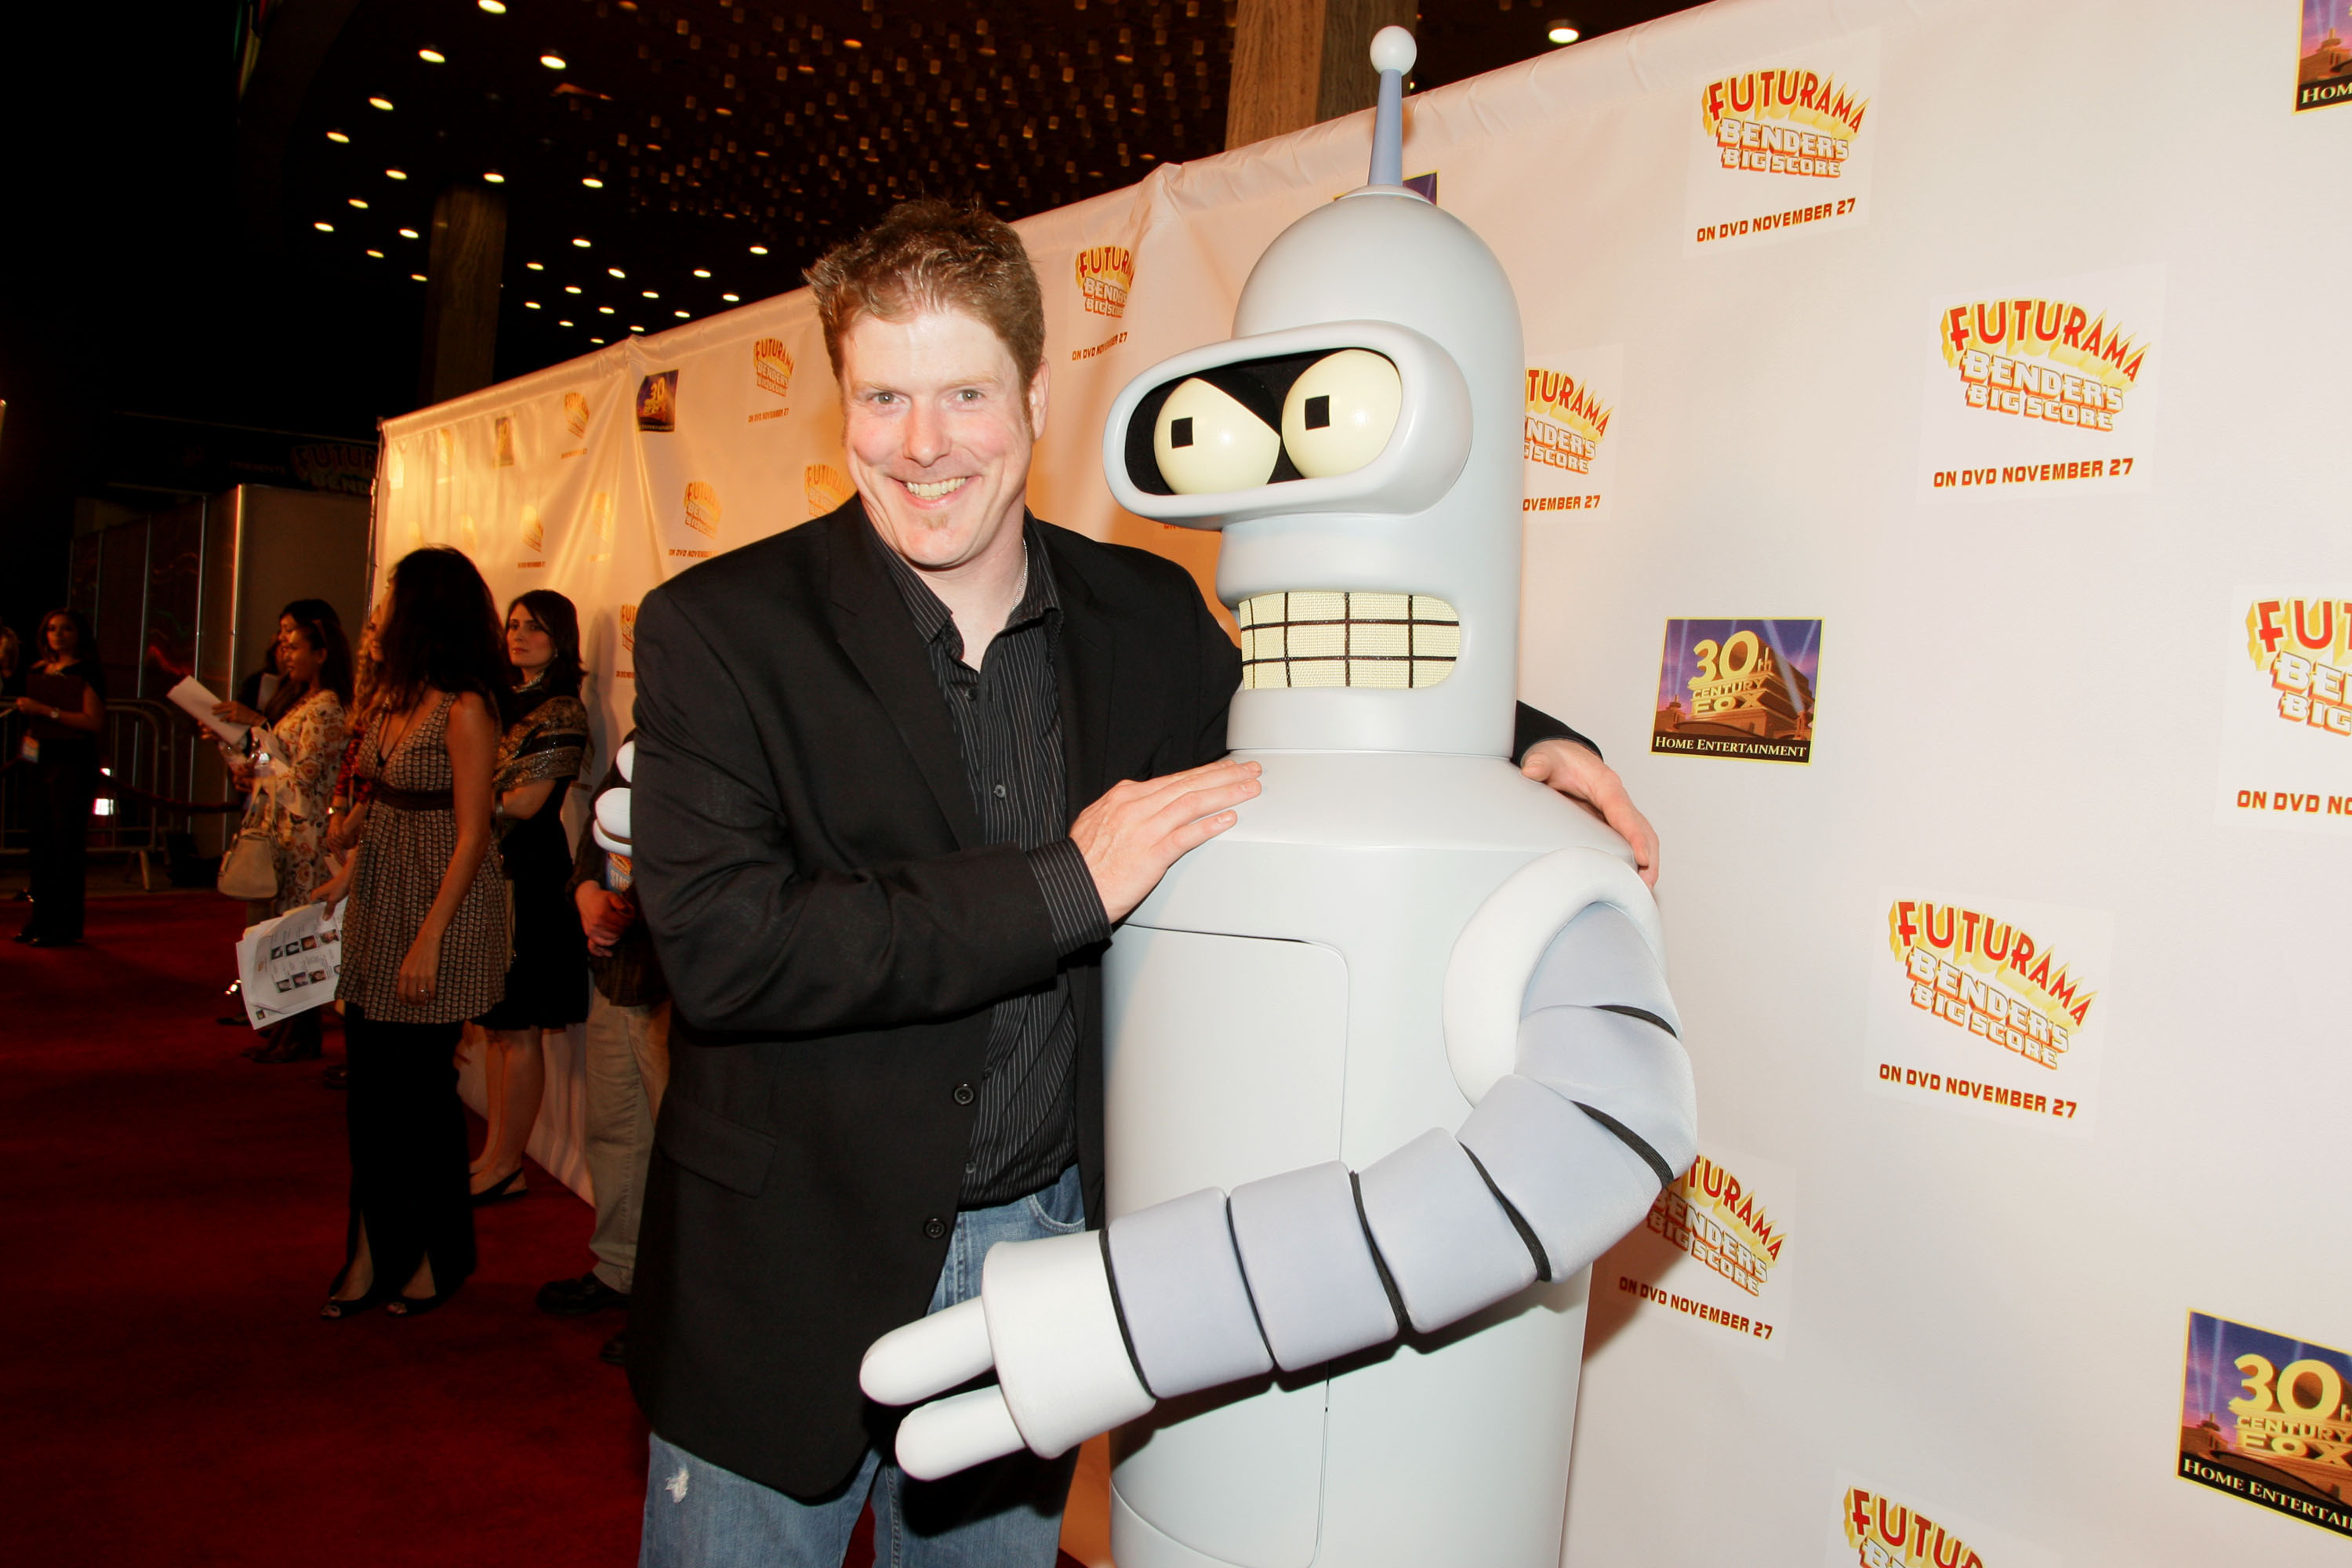 'Futurama' star John DiMaggio poses with a mascot of Bender the Robot.